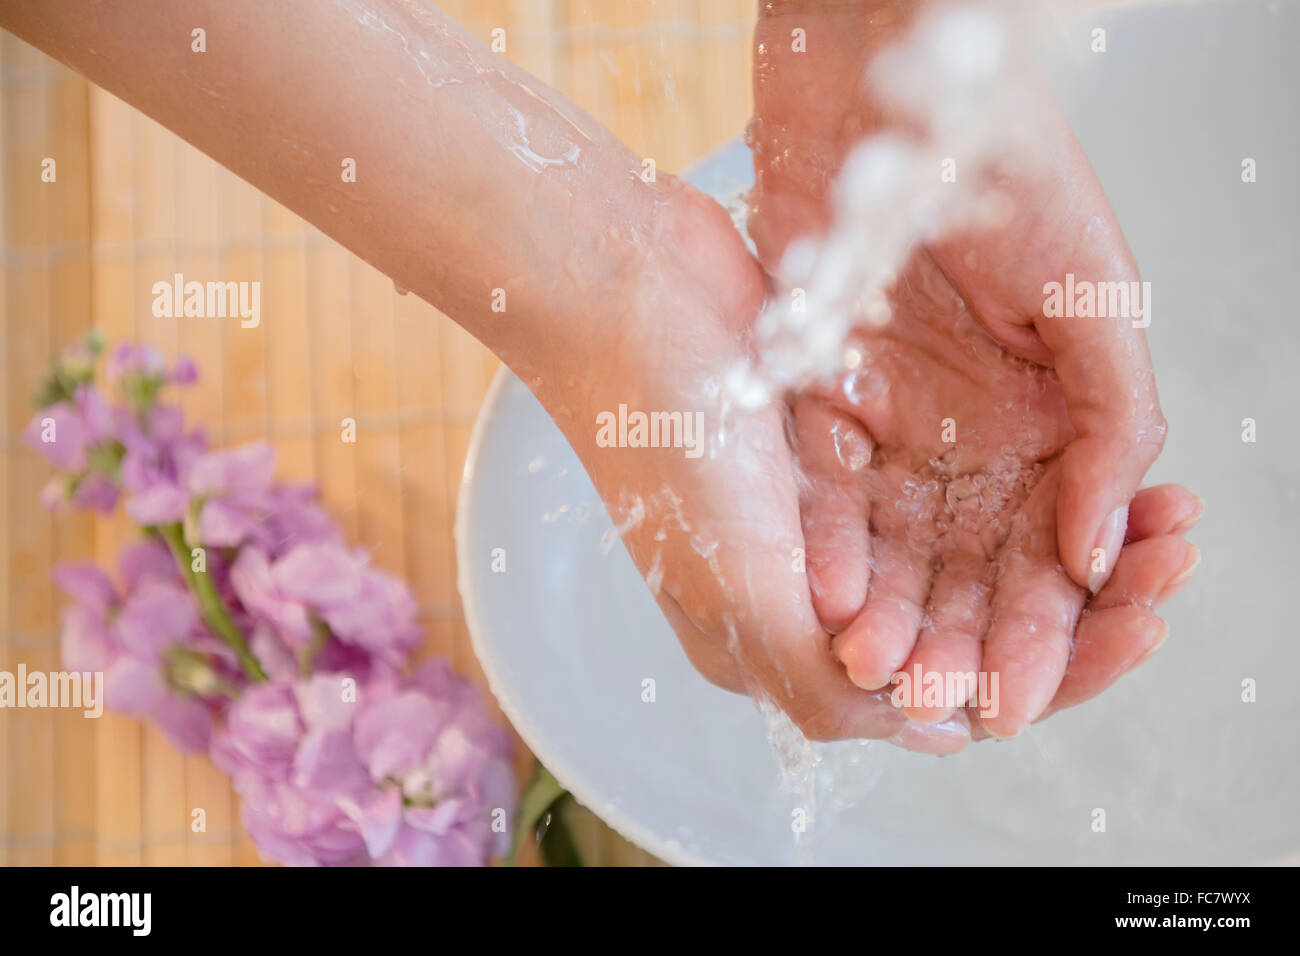 Hispanic woman washing hands Stock Photo